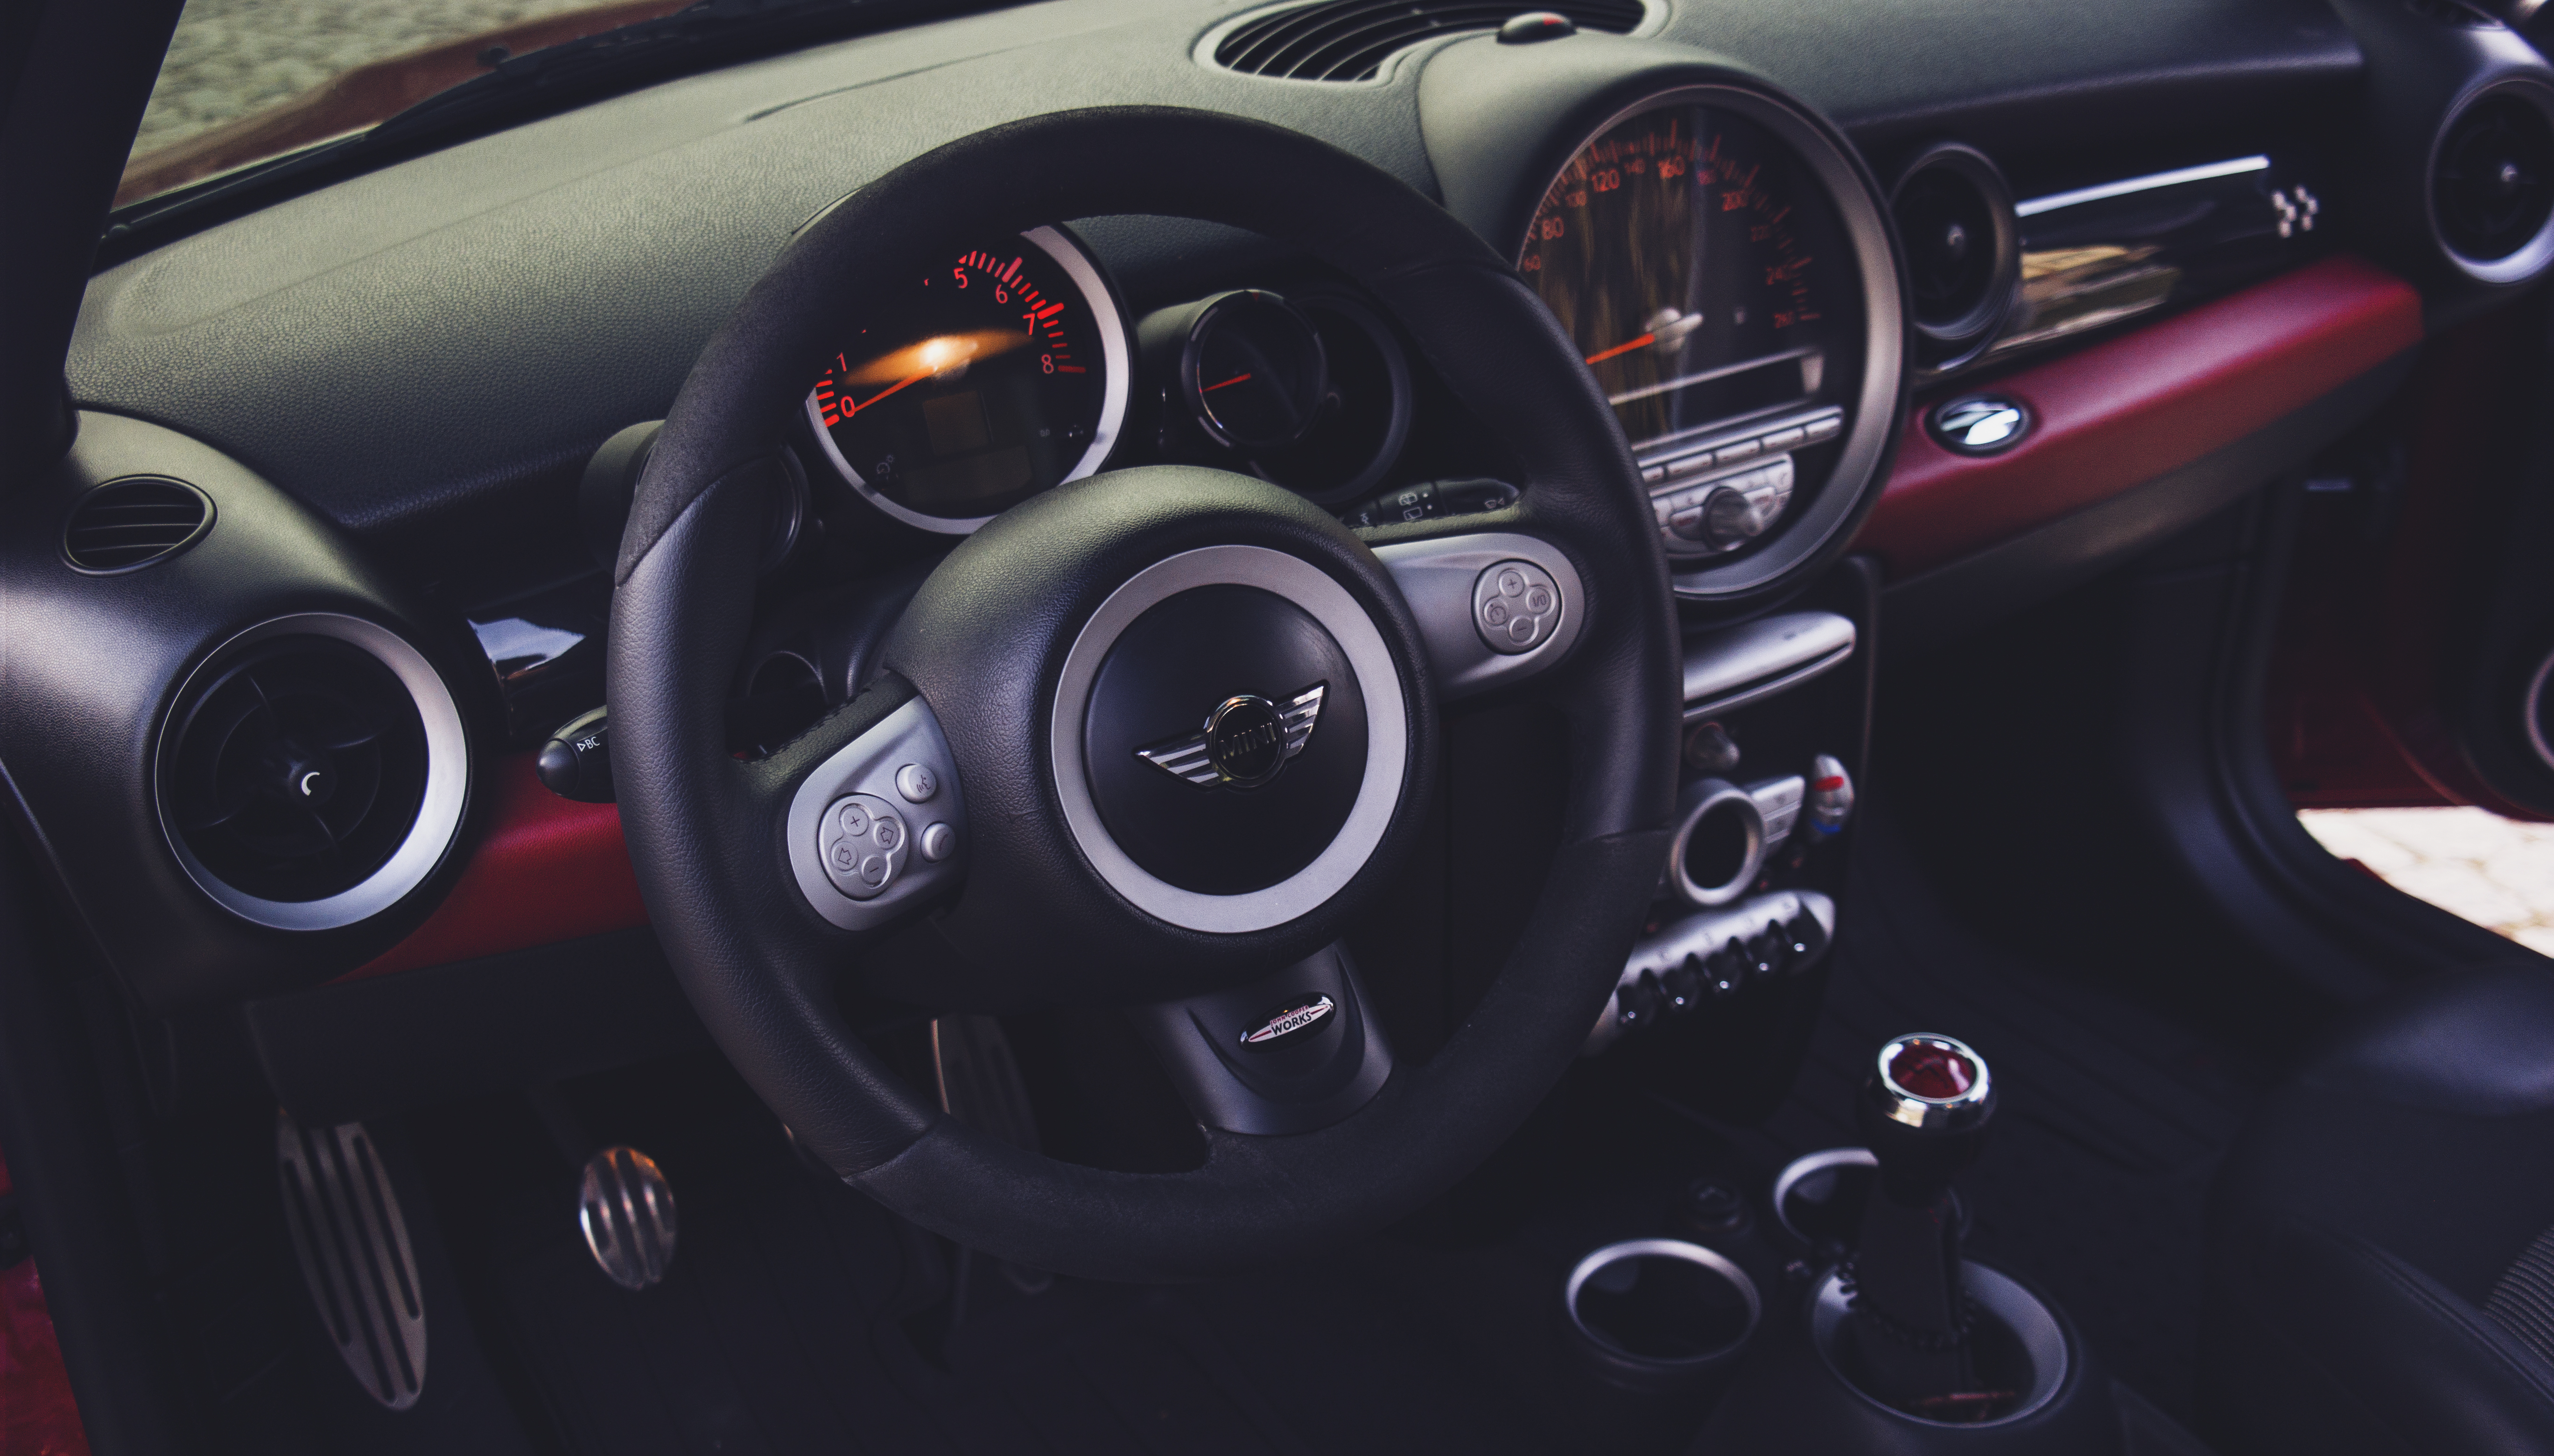 rudder, mini cooper, car interior, cars, steering wheel, vehicle interior phone background